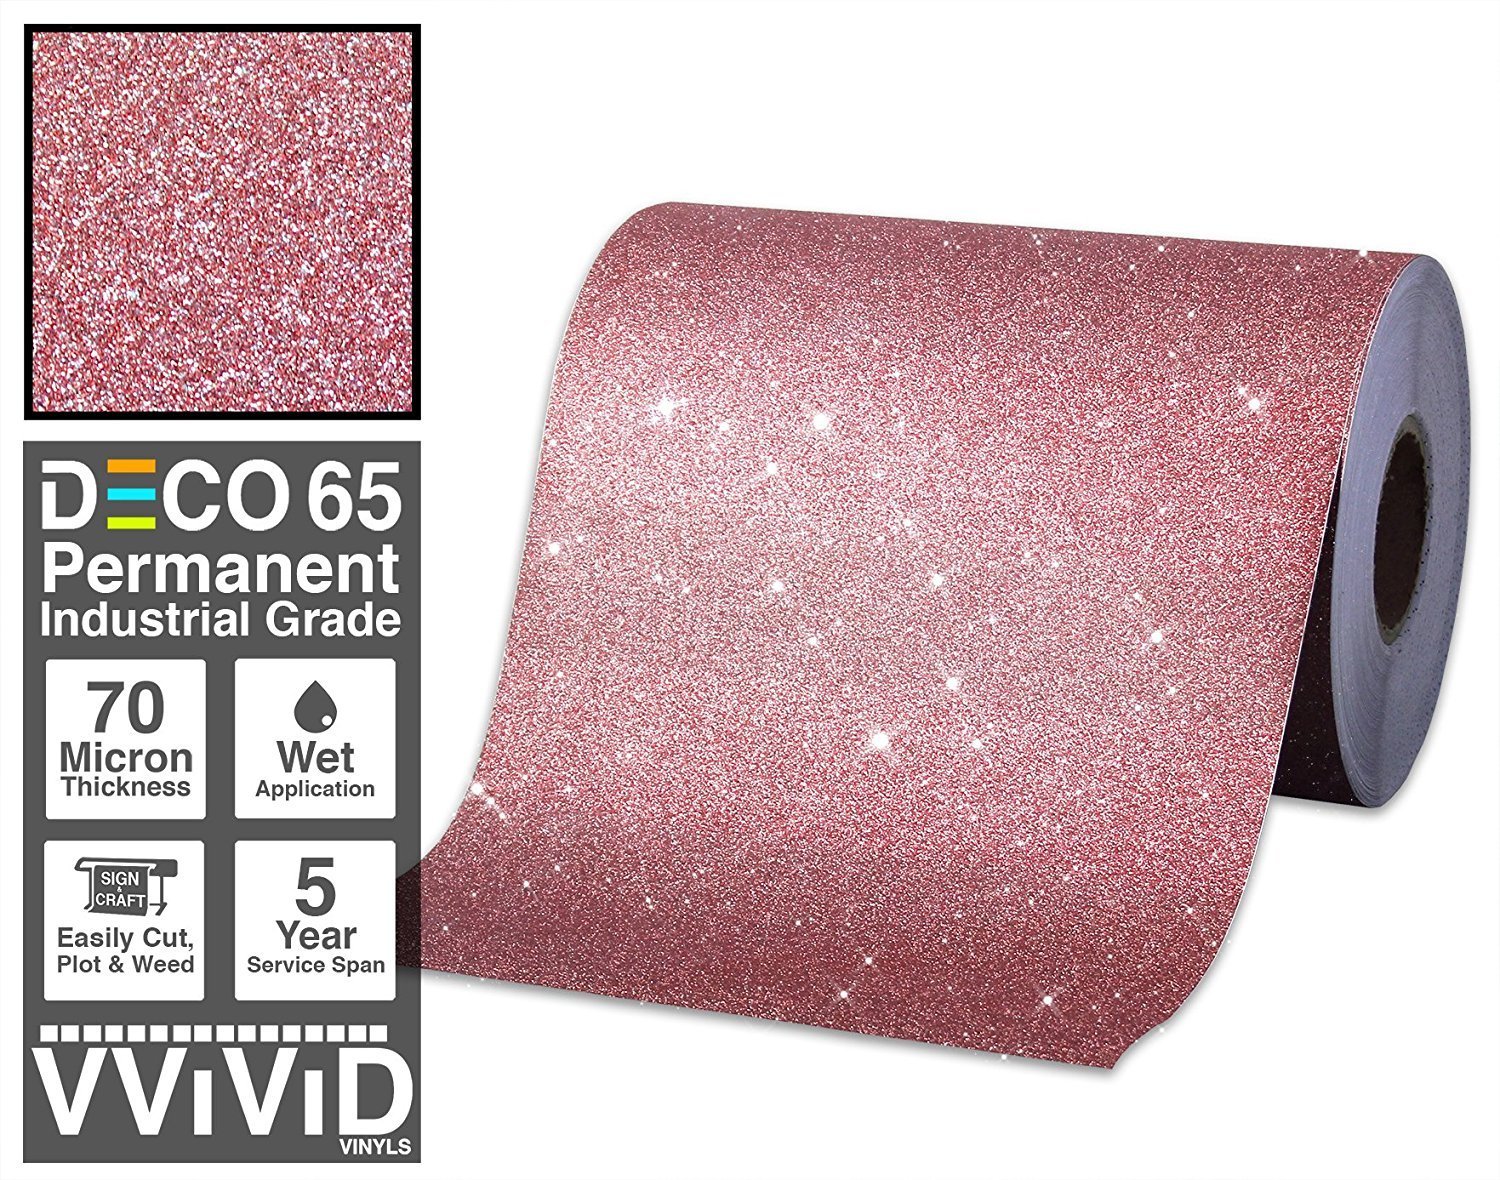 Deco65 Red Glitter Craft Vinyl - The VViViD Vinyl Wrap Shop